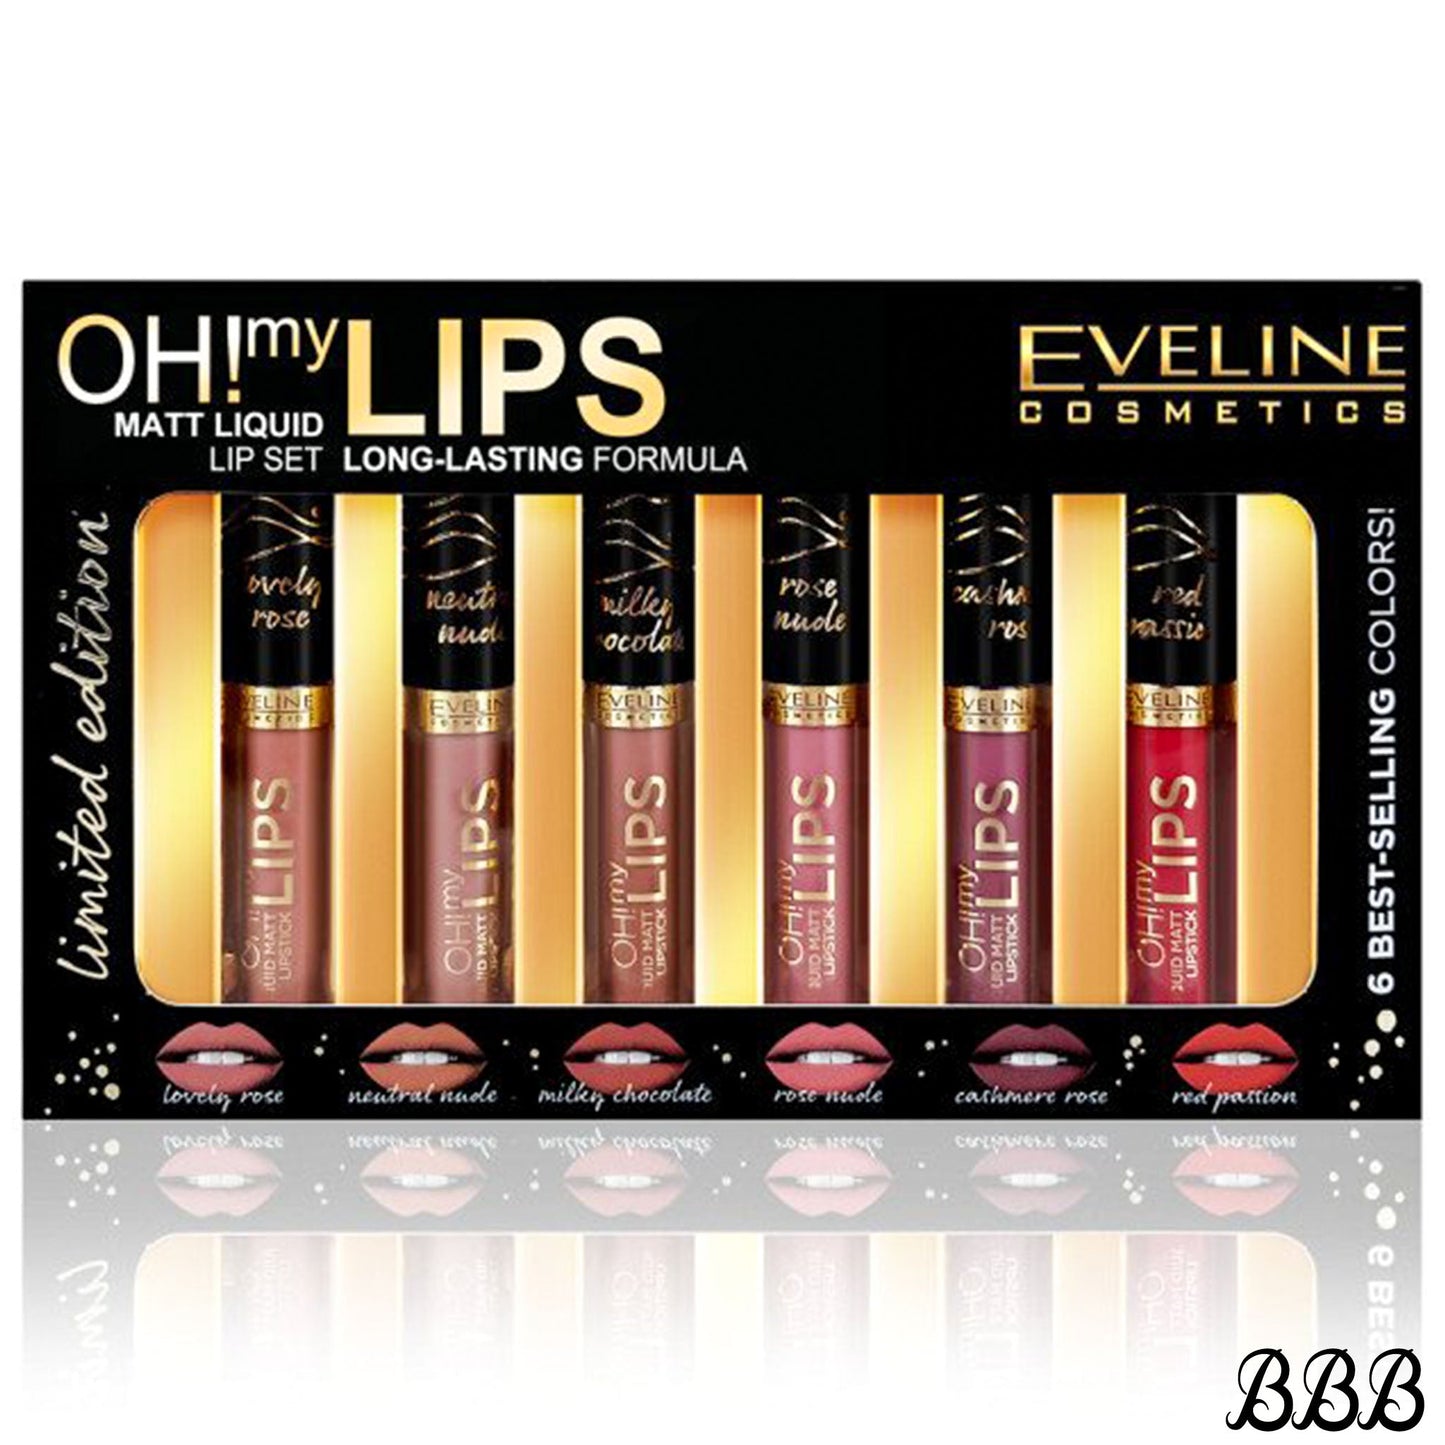 Oh my lips Gift Set ( 6 Shades )